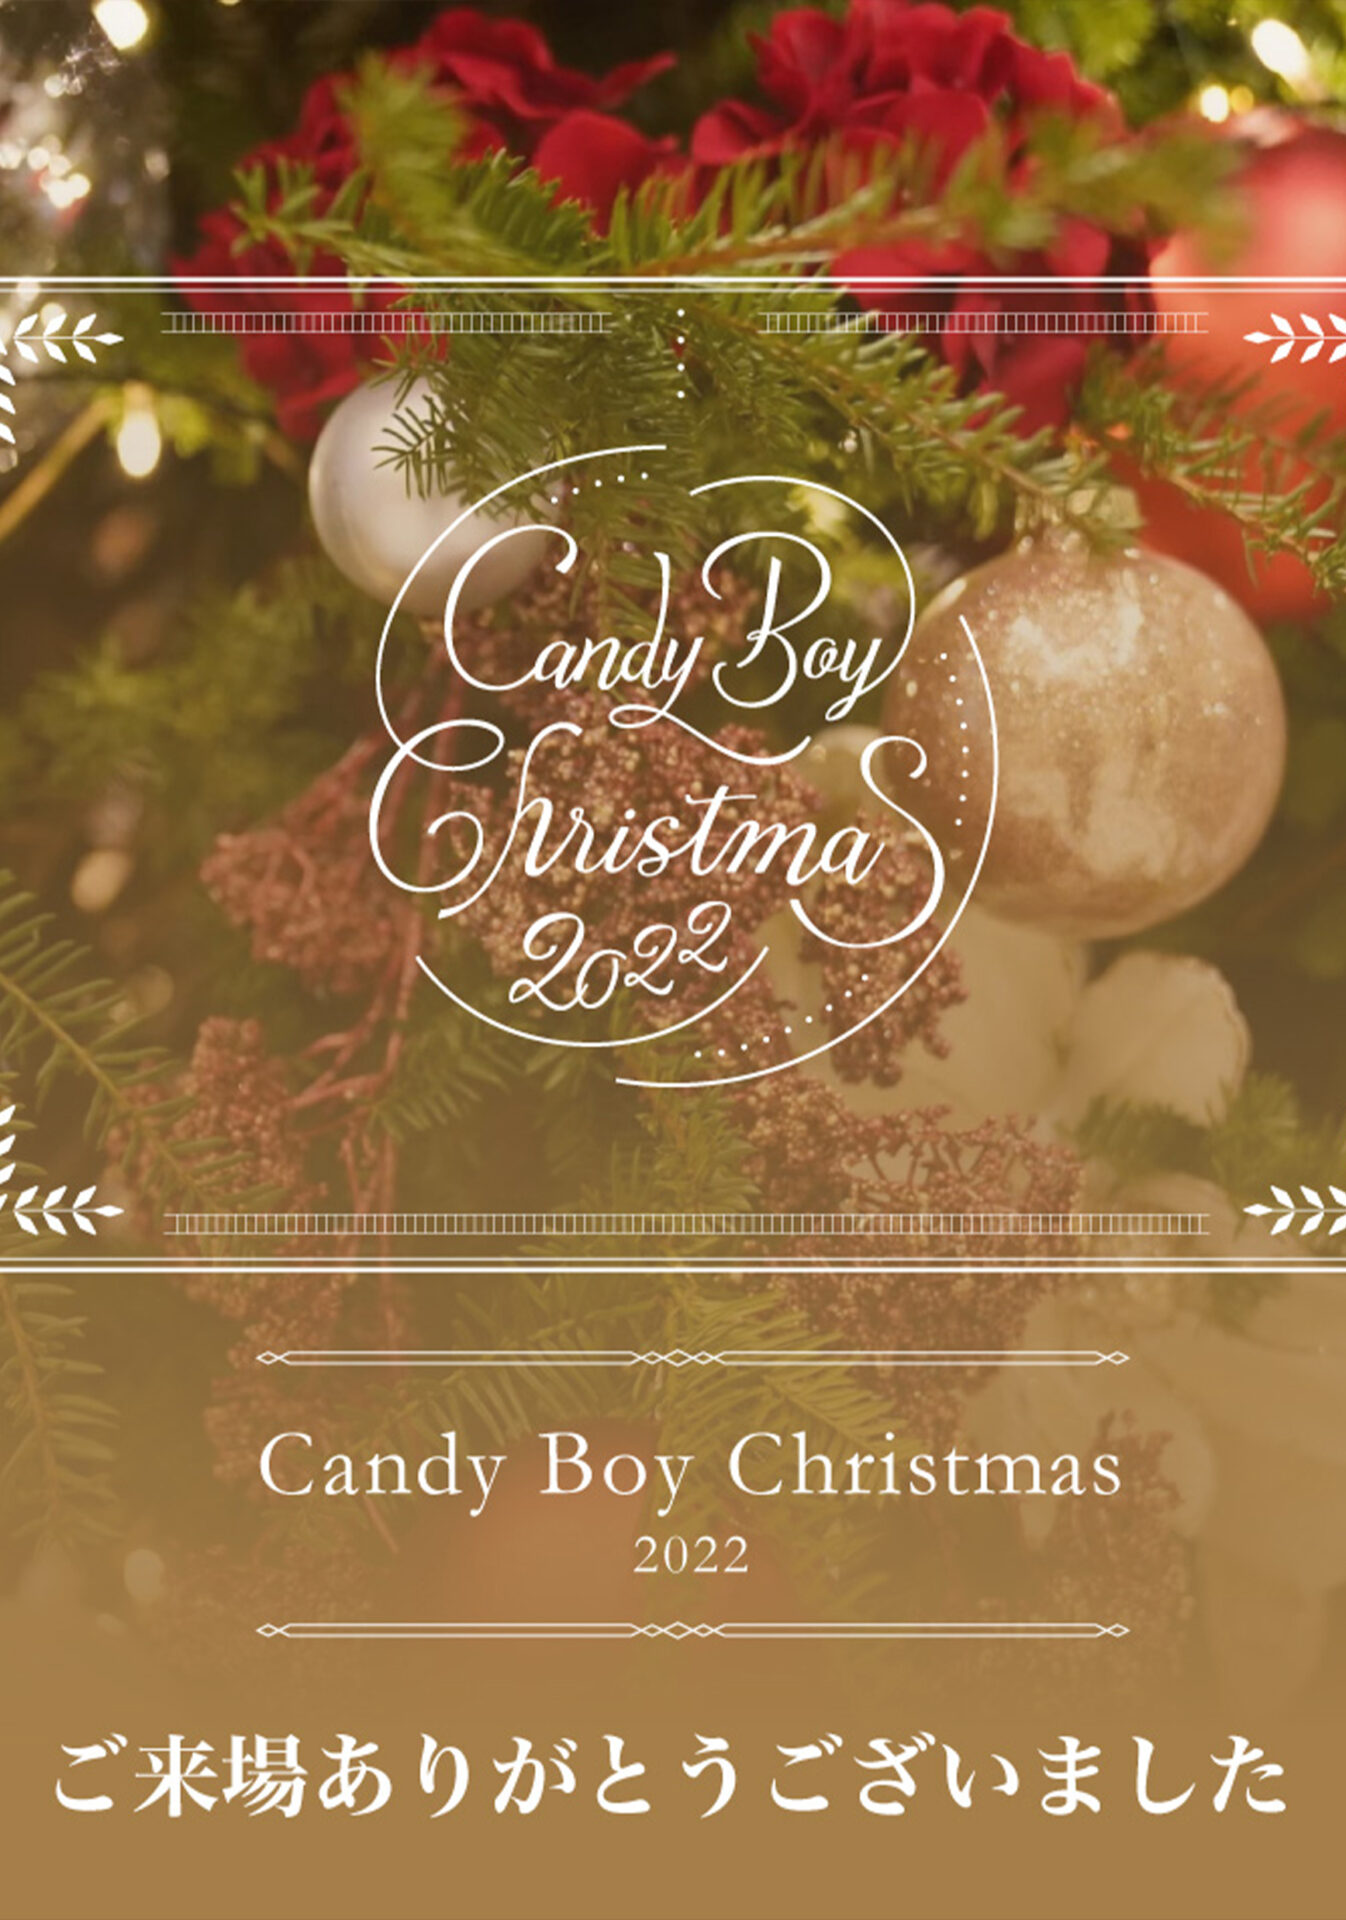 『Candy boy Christmas 2022』脚本